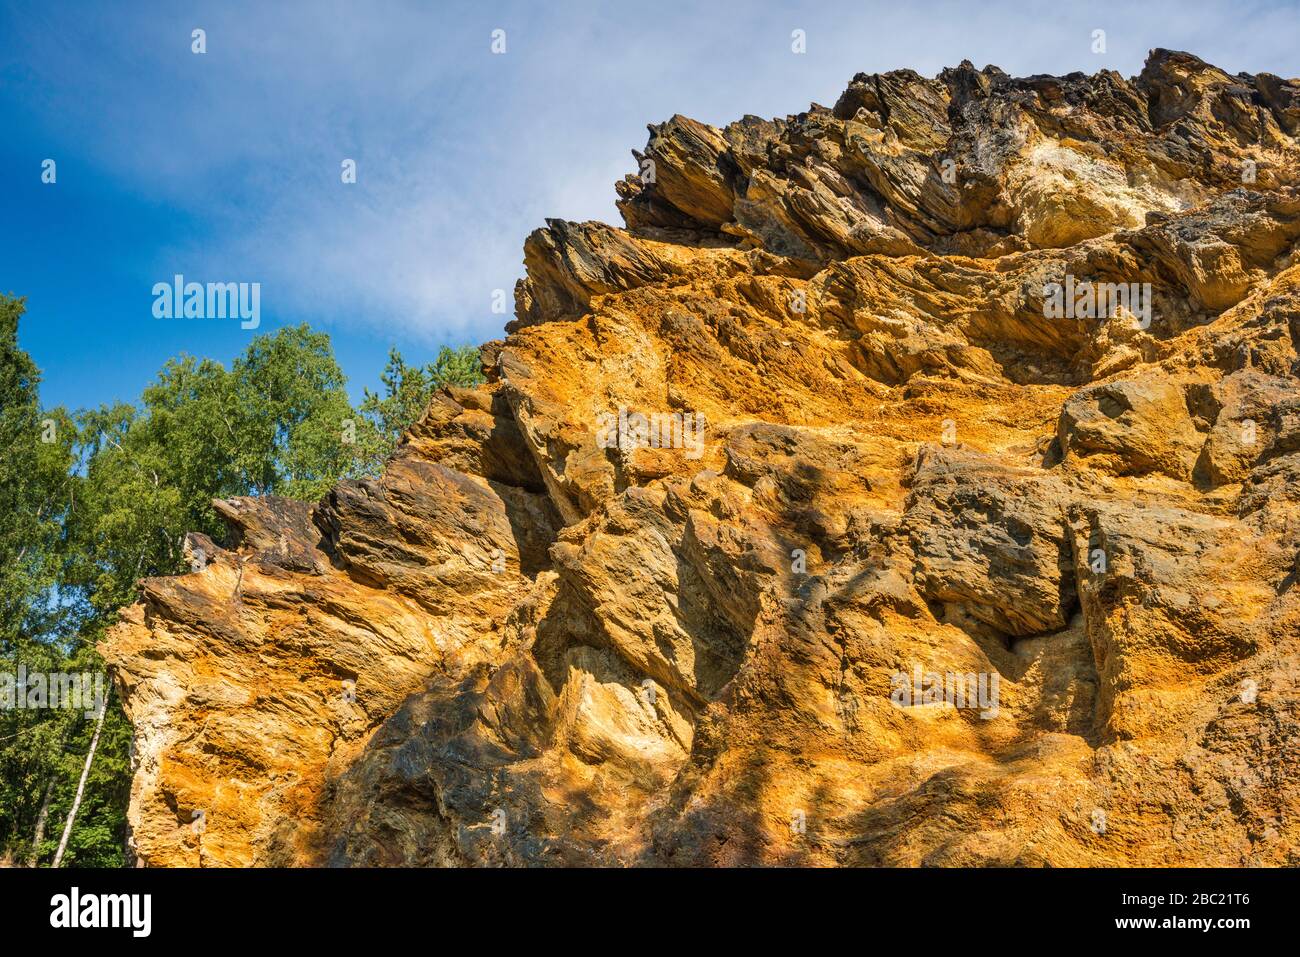 Granite rocks at Colourful Lakelets (Kolorowe Jeziorka), former pyrite mining area in Rudawy Janowickie mountain range, Lower Silesia, Poland Stock Photo